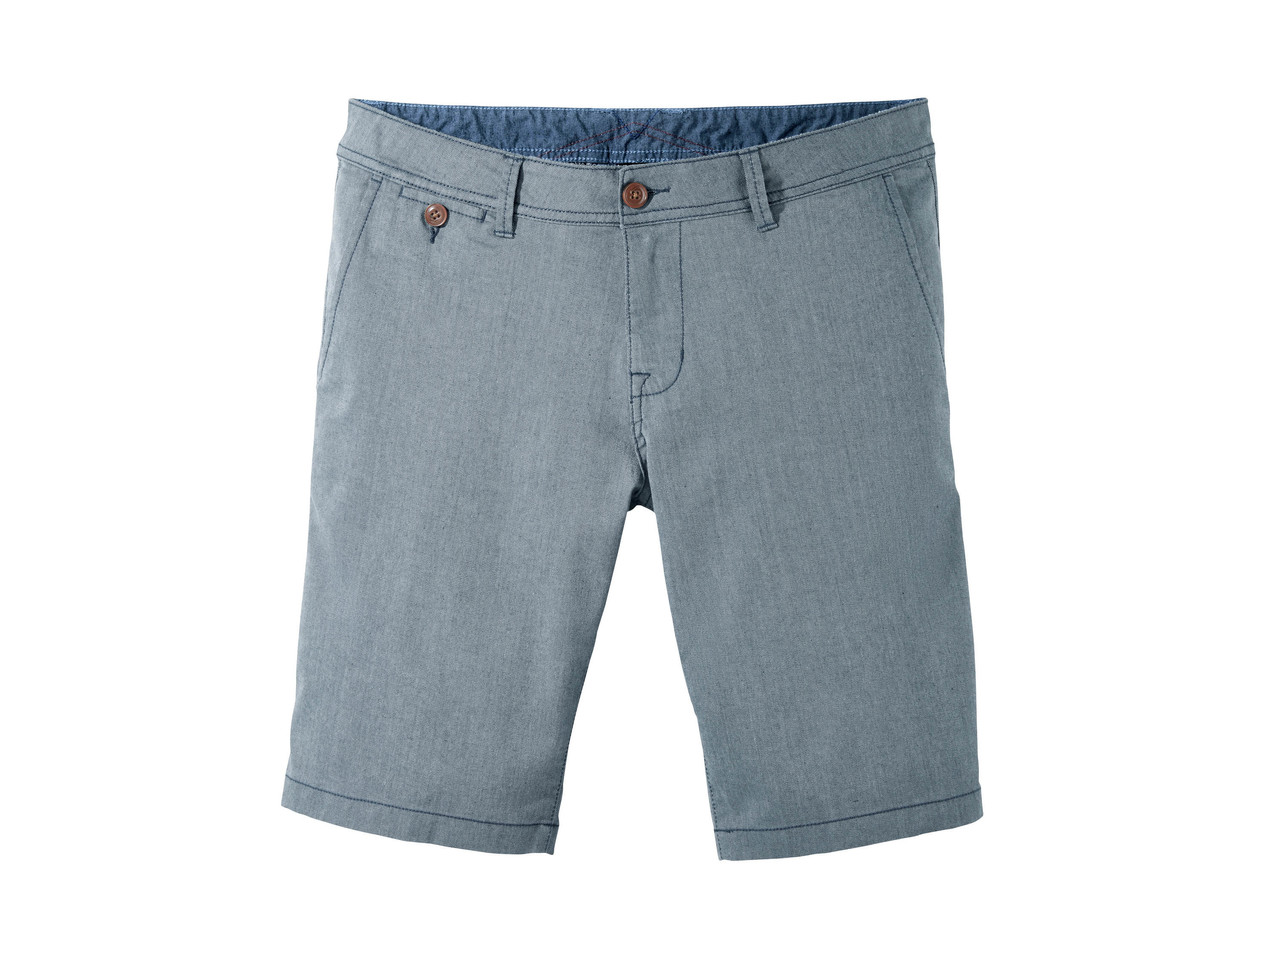 LIVERGY Men's Shorts